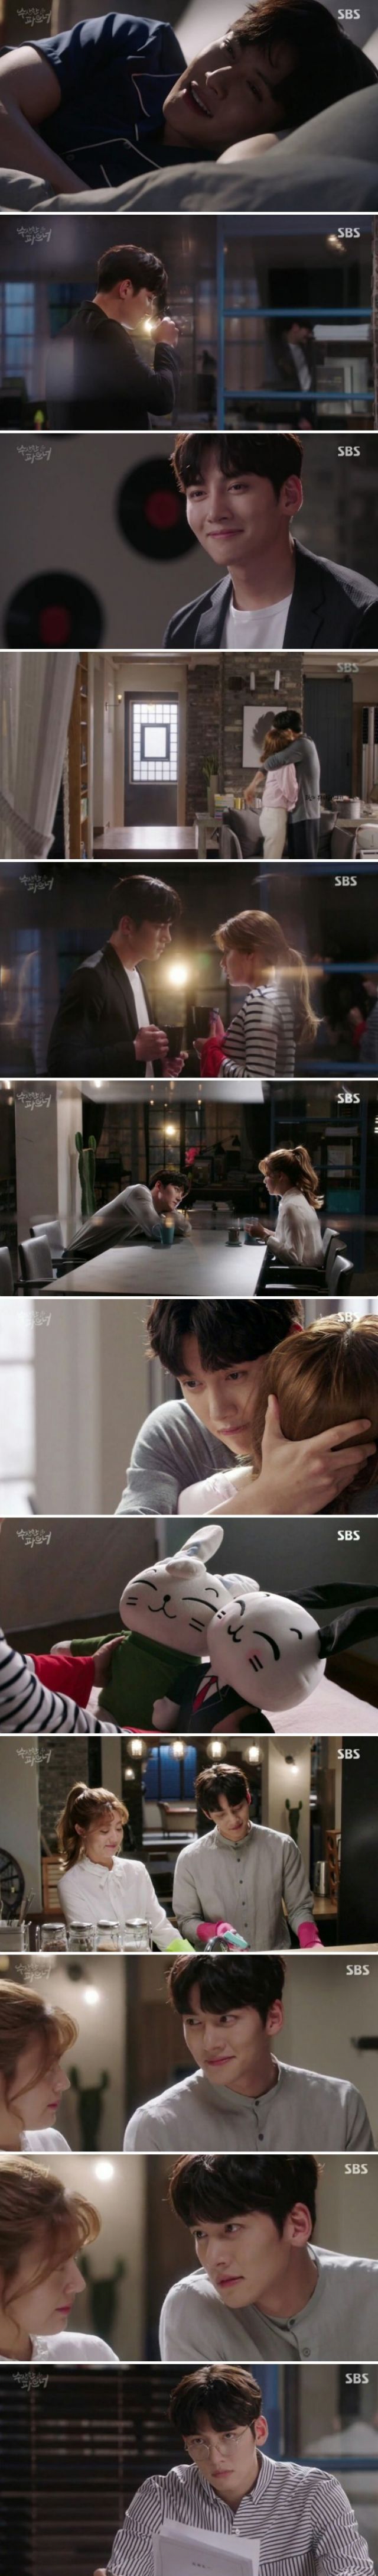 episodes 19 and 20 captures for the Korean drama 'Suspicious Partner'